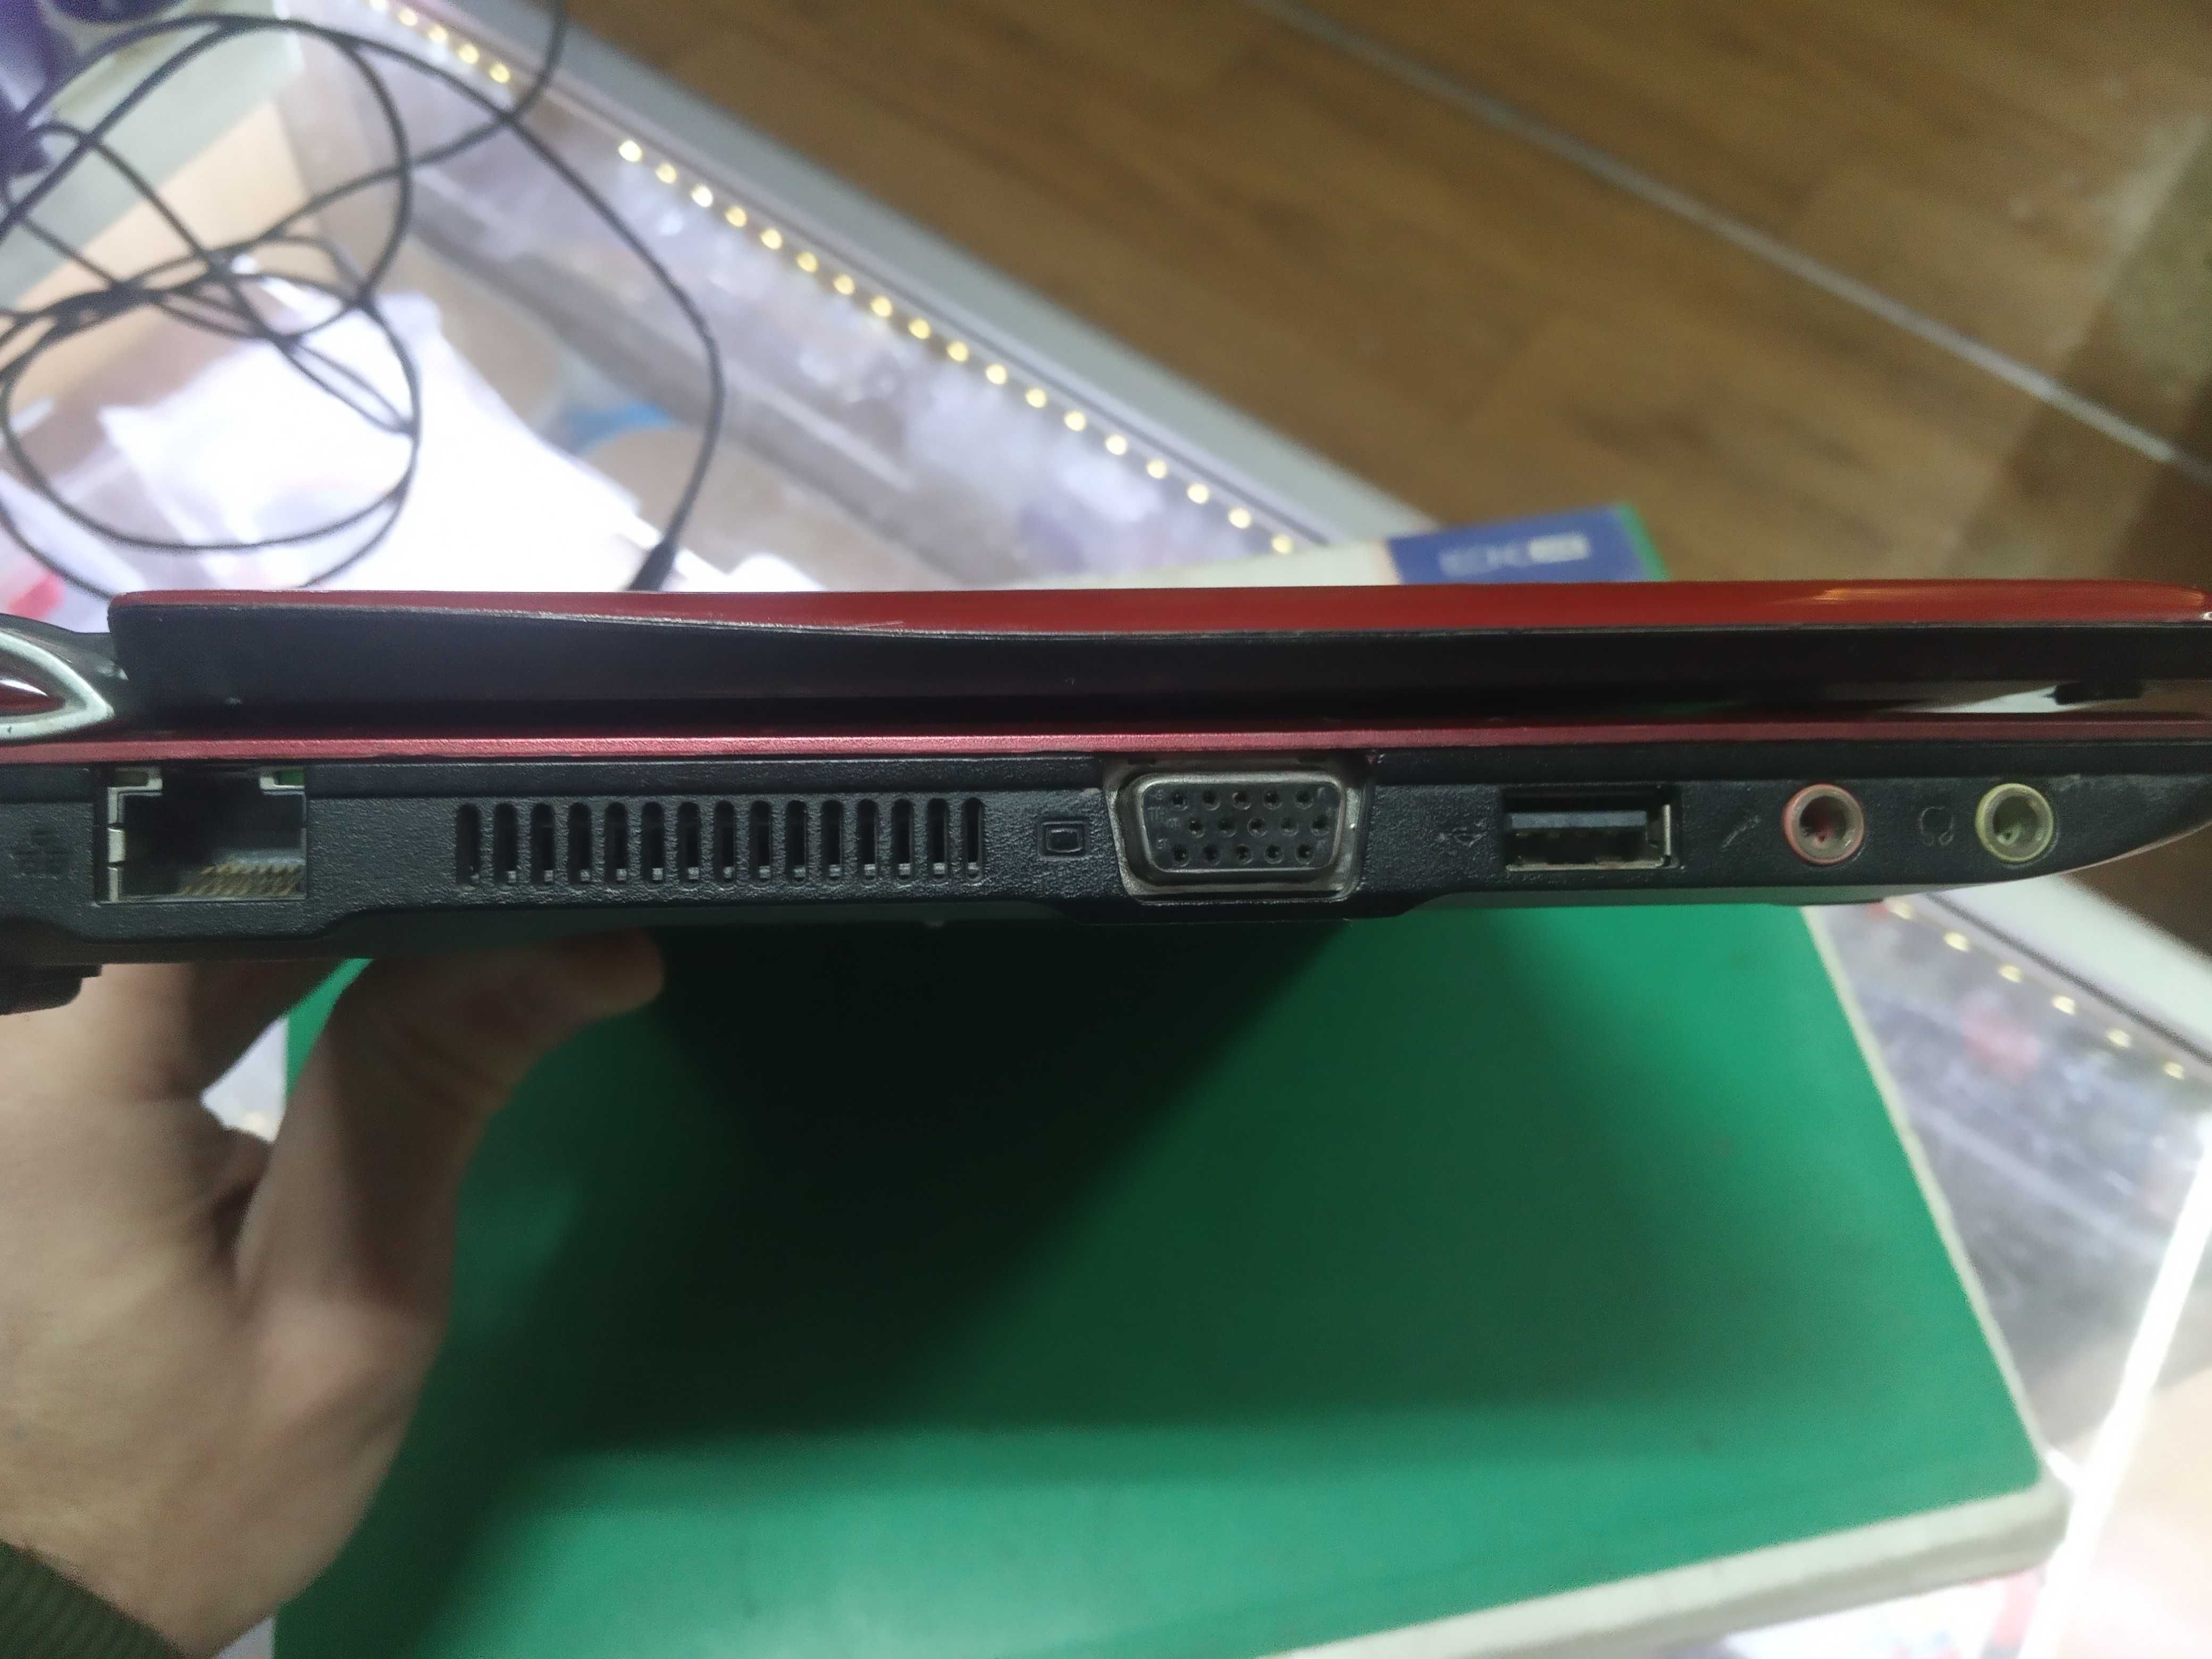 Ноутбук Acer aspire D250-0Br